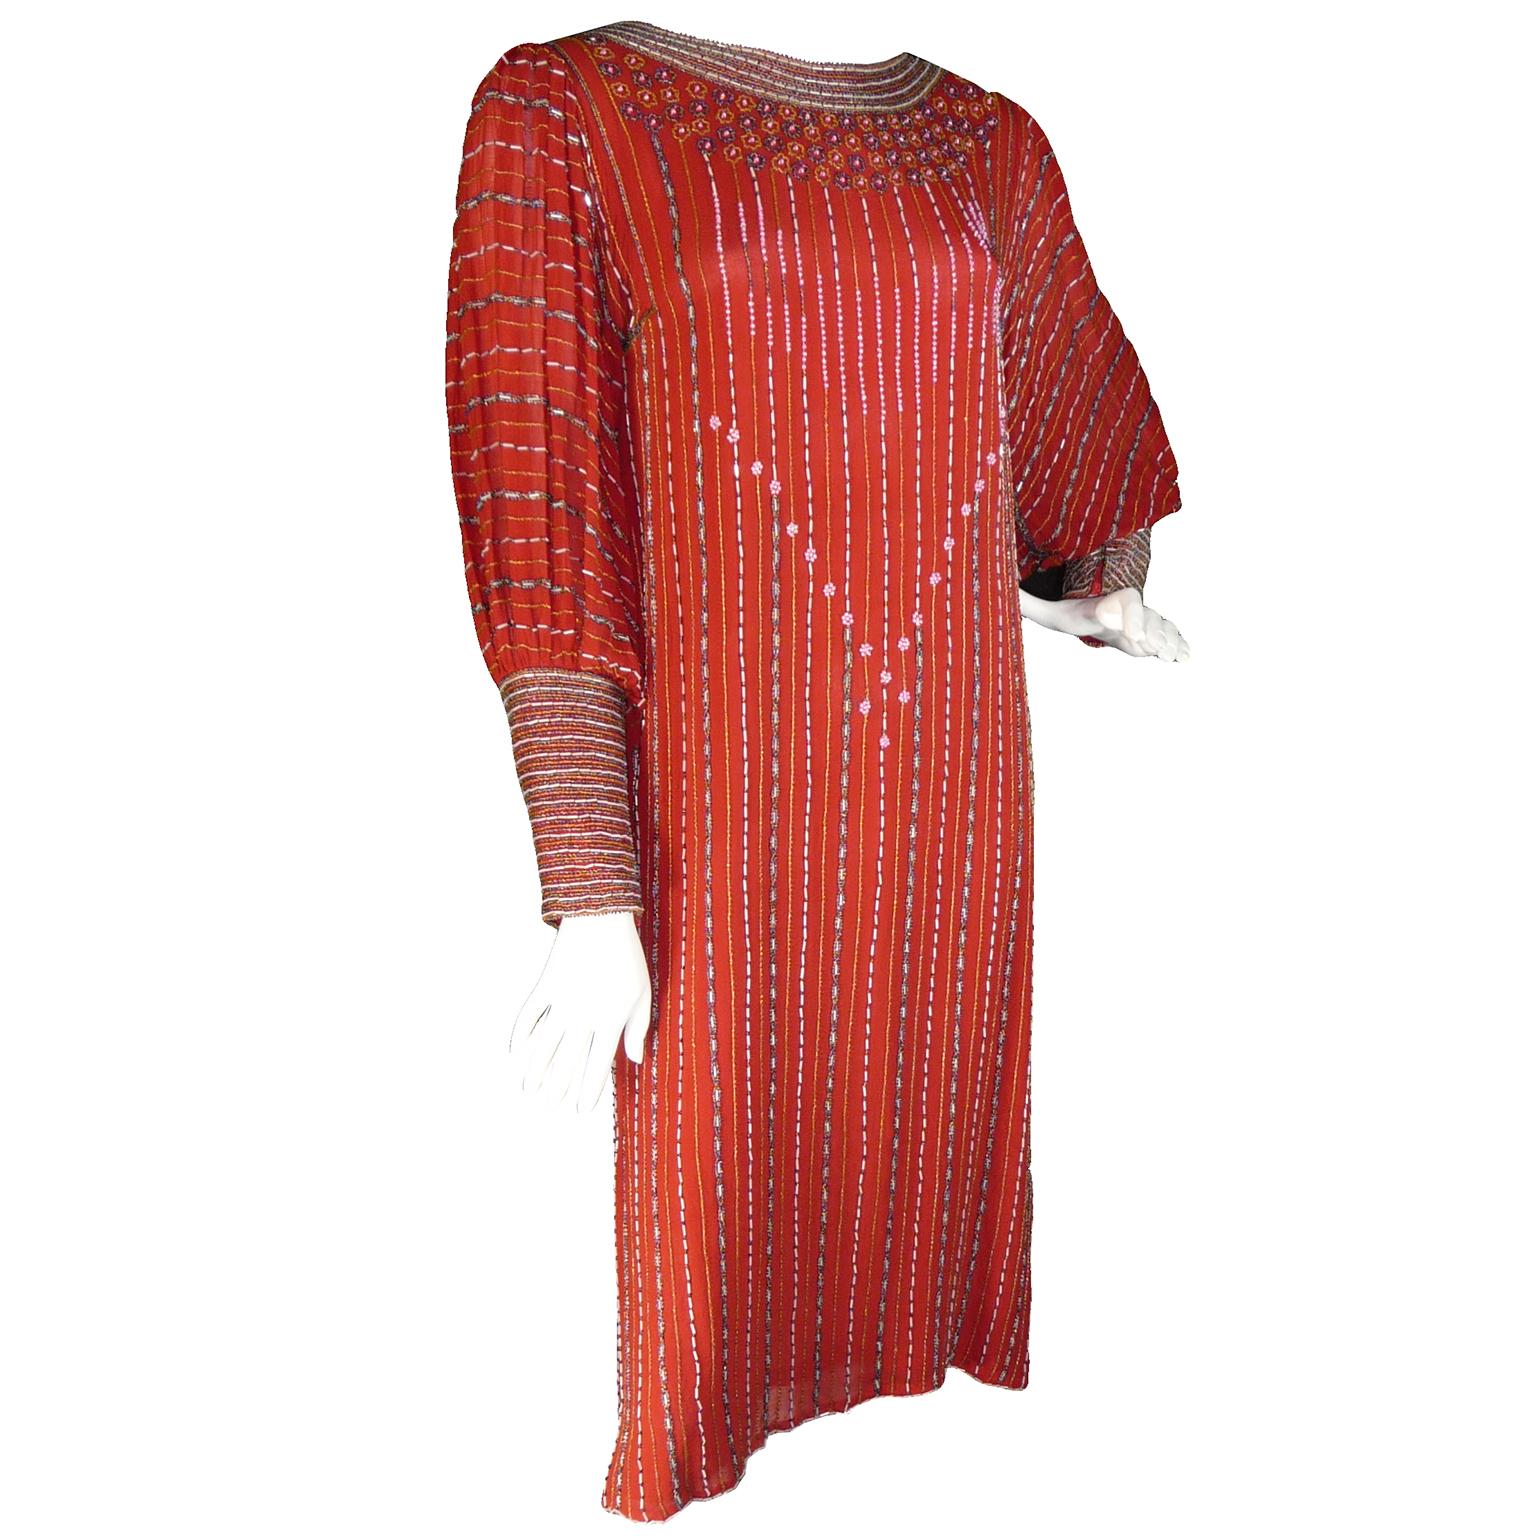 authentic 1920s dress